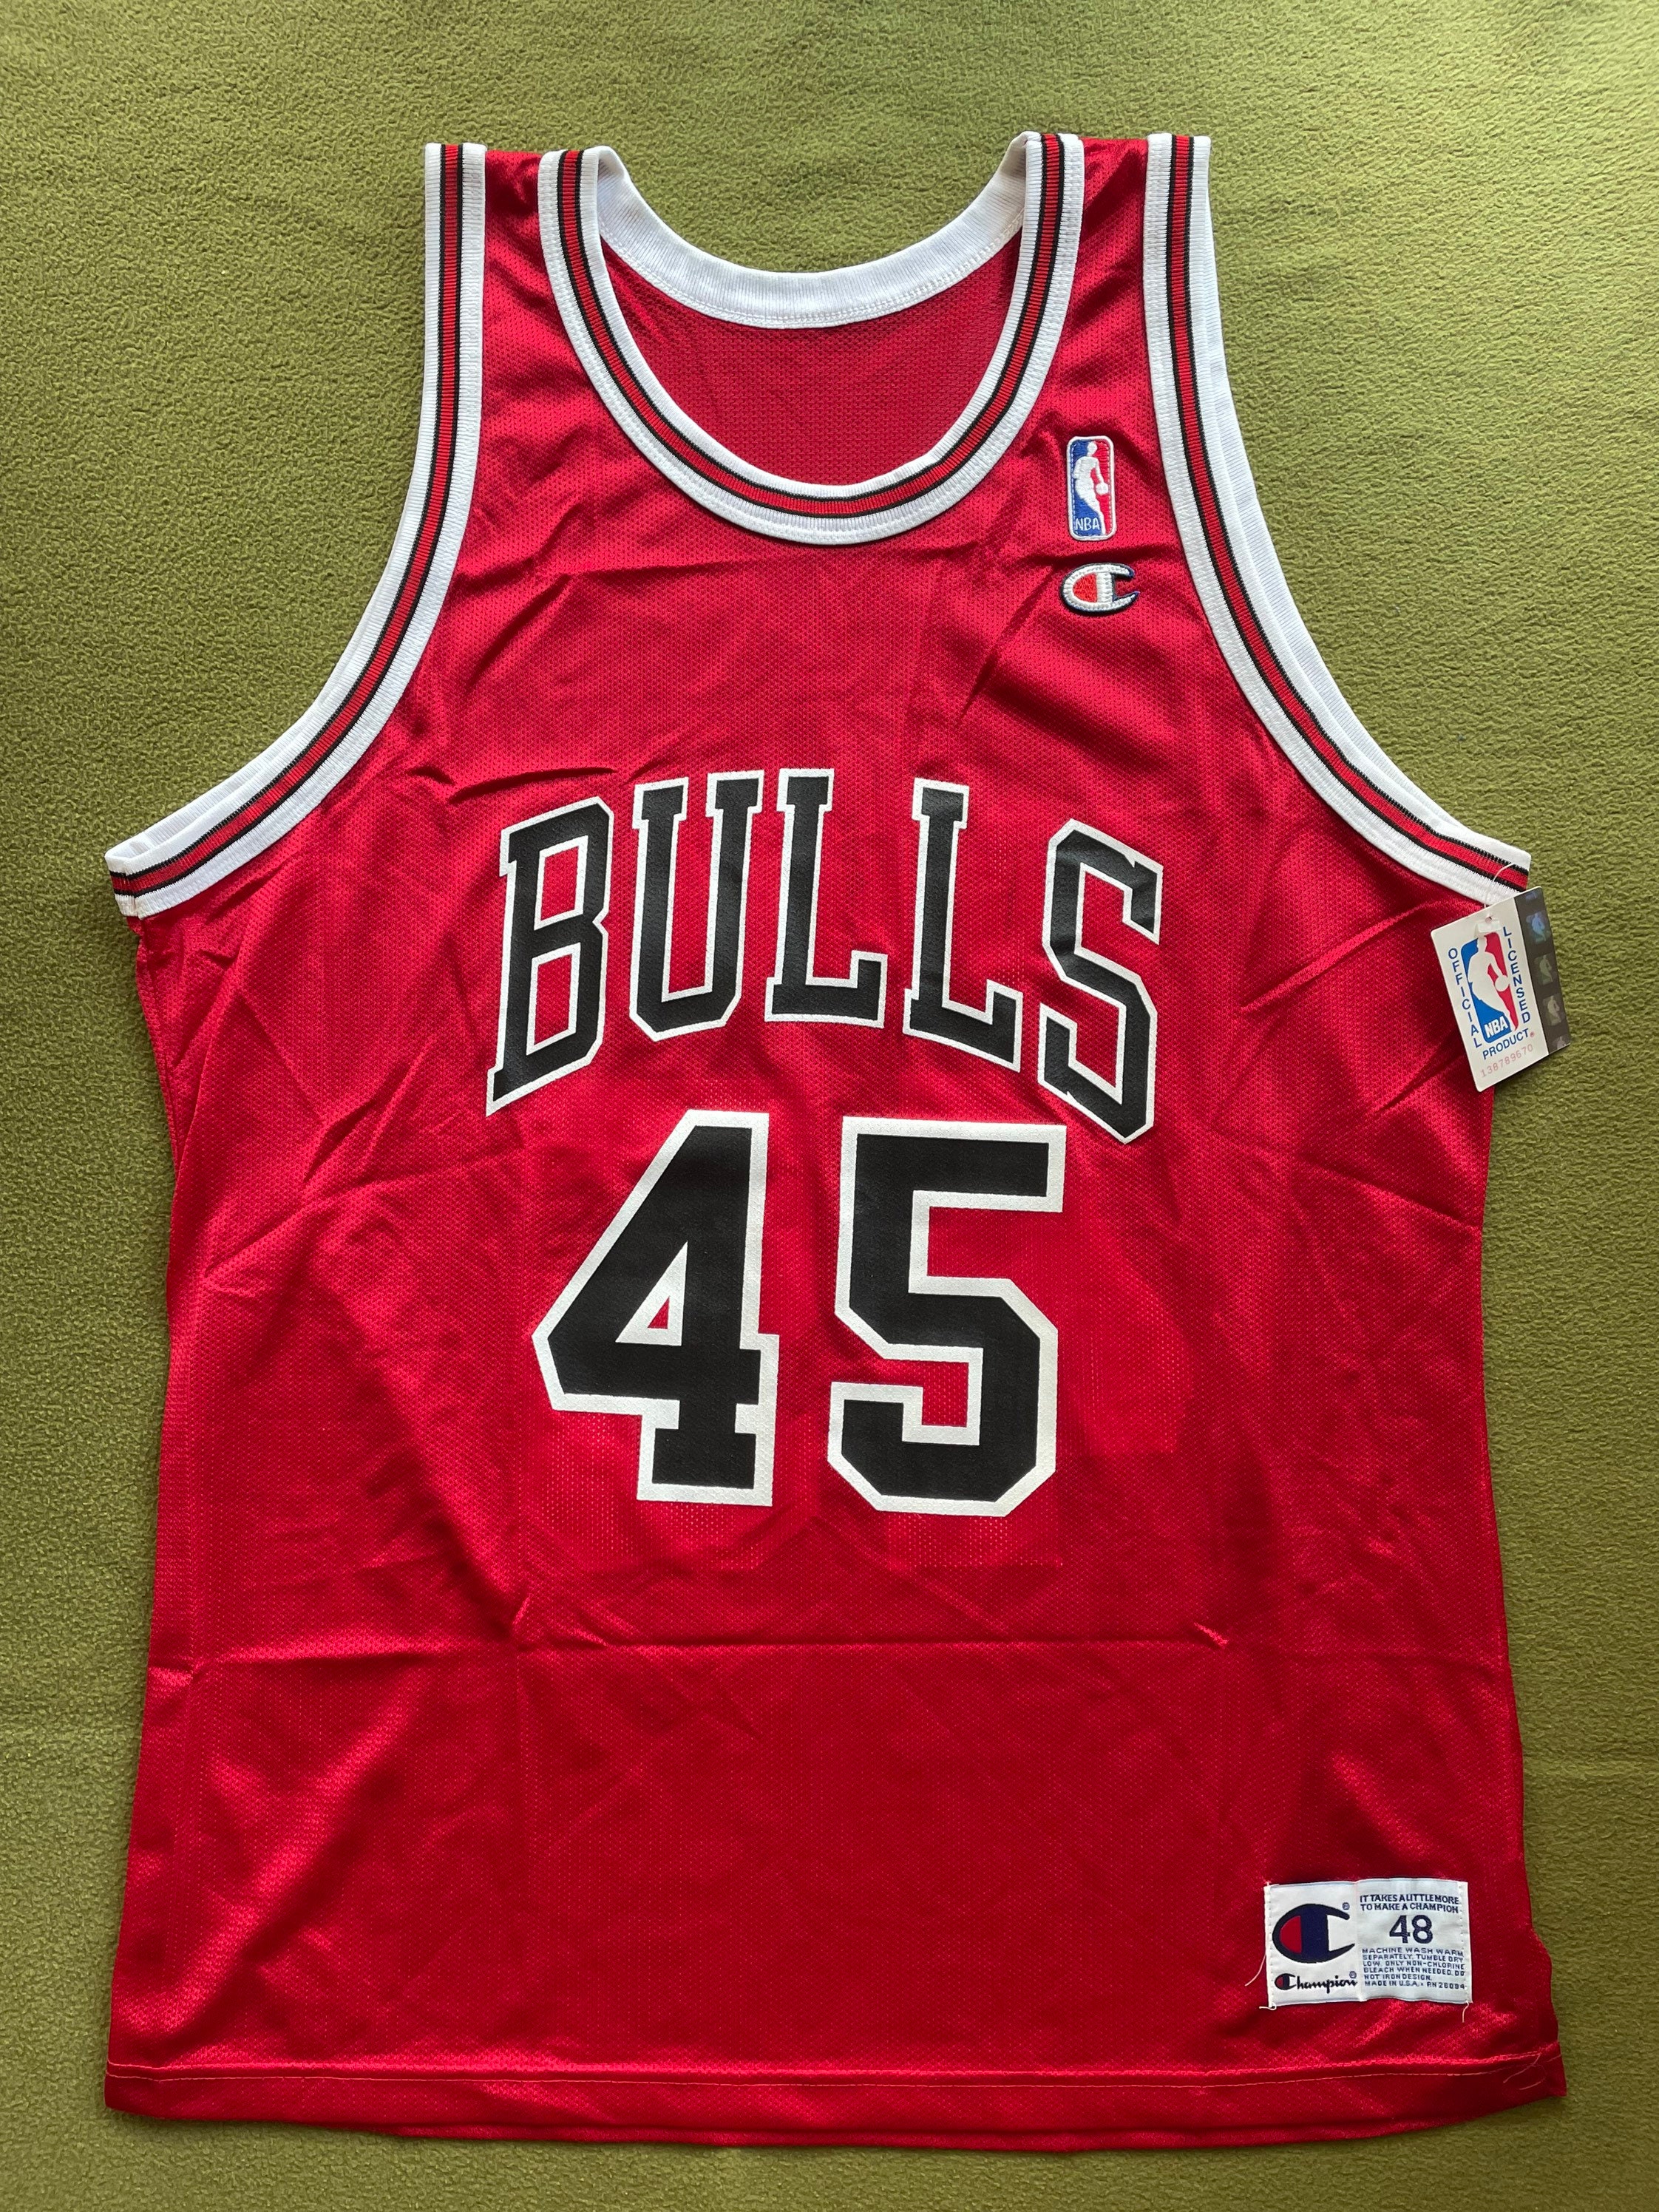 Vintage Michael Jordan No.45 Chicago Bulls Jersey 